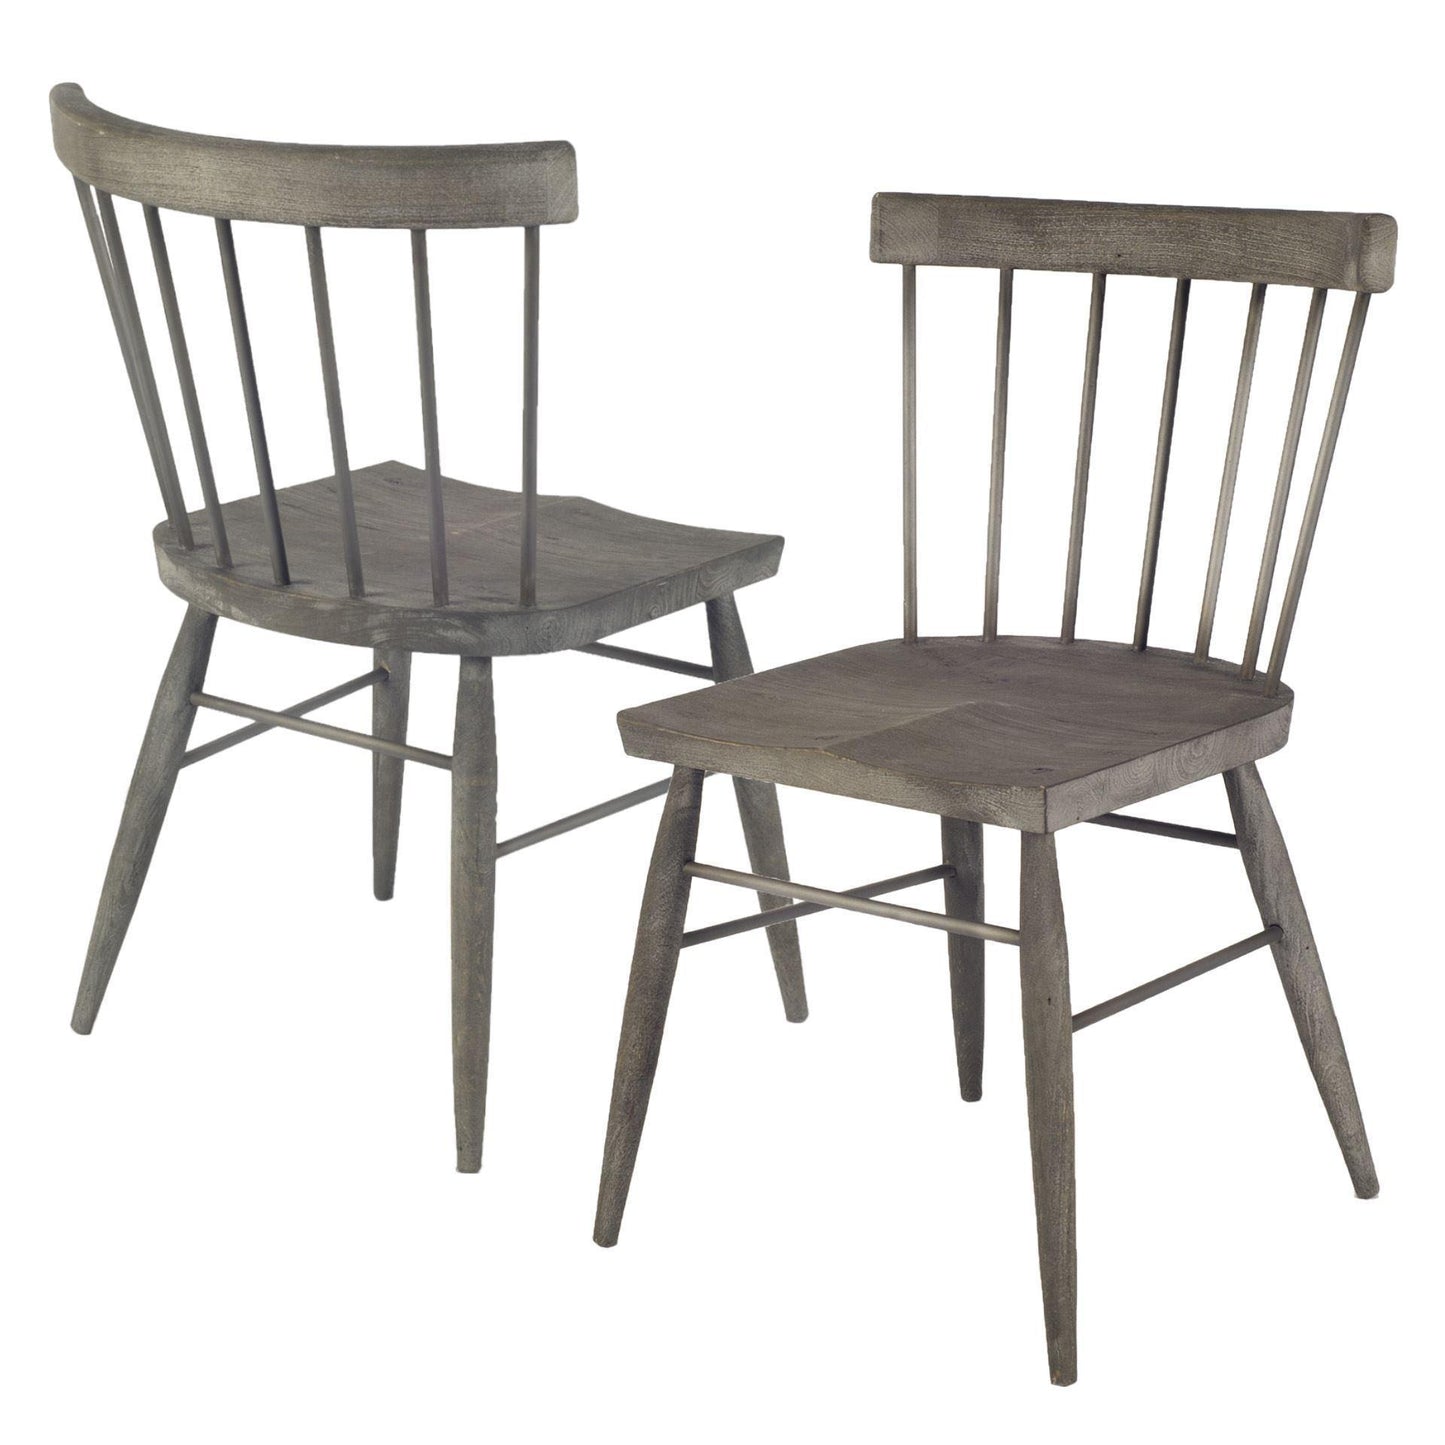 Barrett IV Table - 4 Chairs